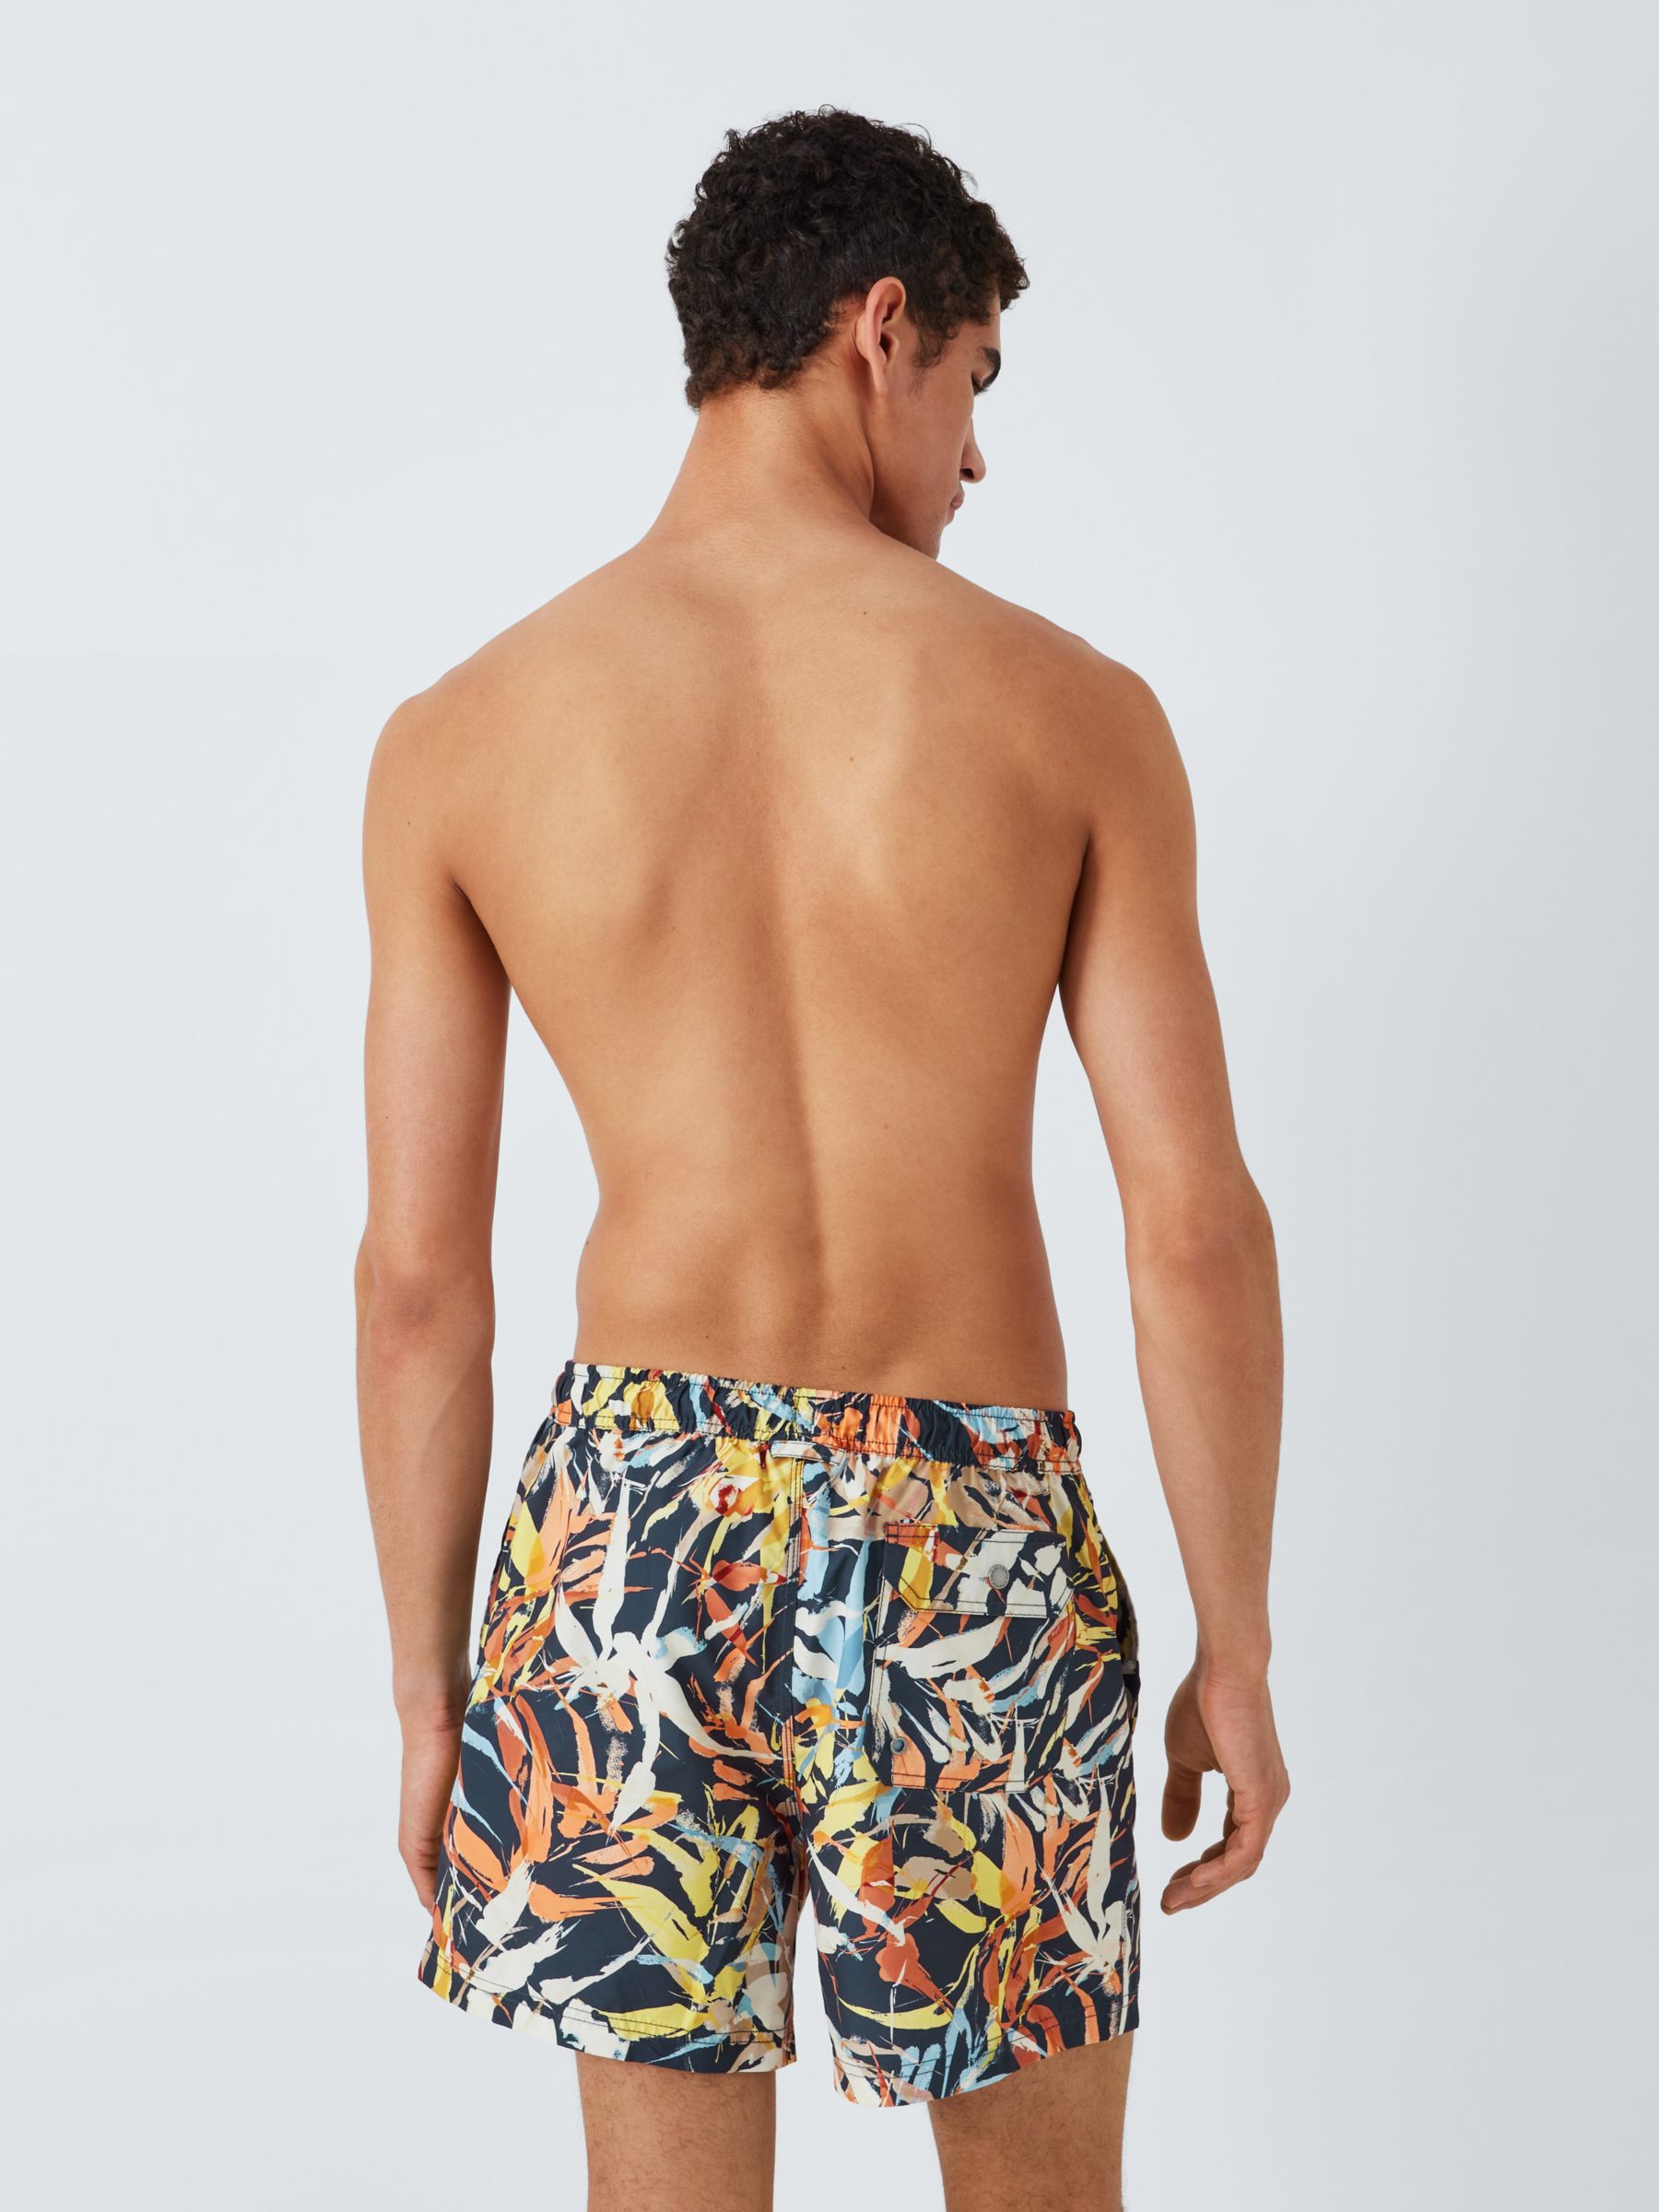 John Lewis Bamboo Print Recycled Polyester Swim Shorts, Multi, XL